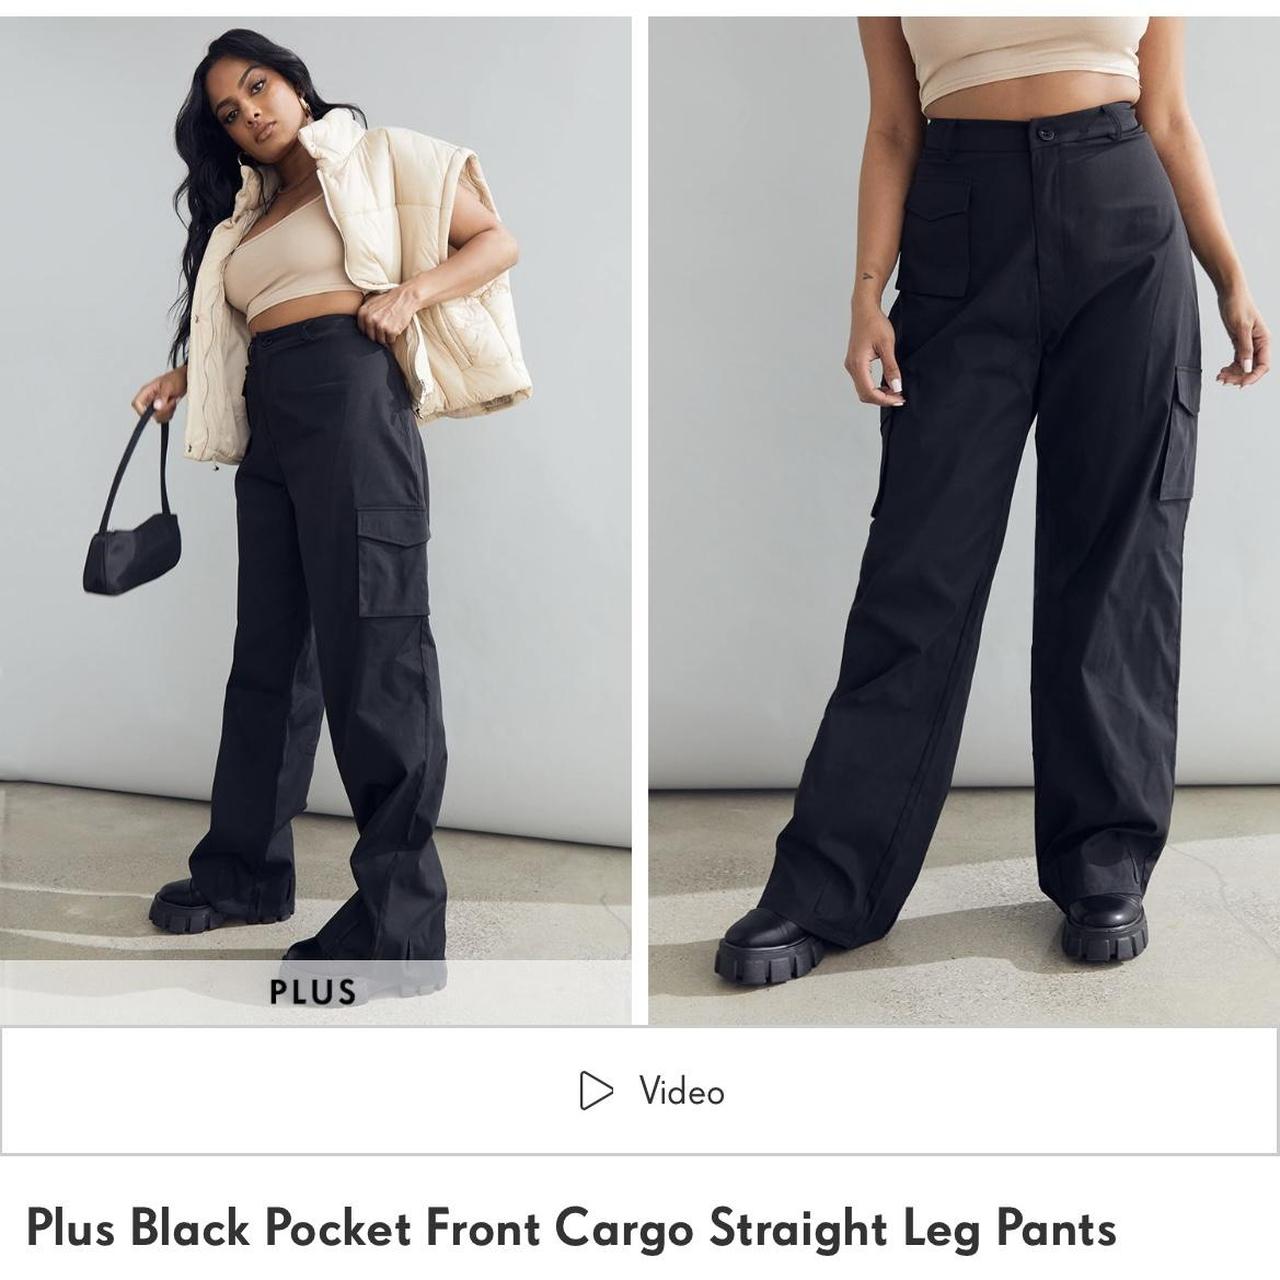 Plus Black Pocket Front Cargo Straight Leg Pants